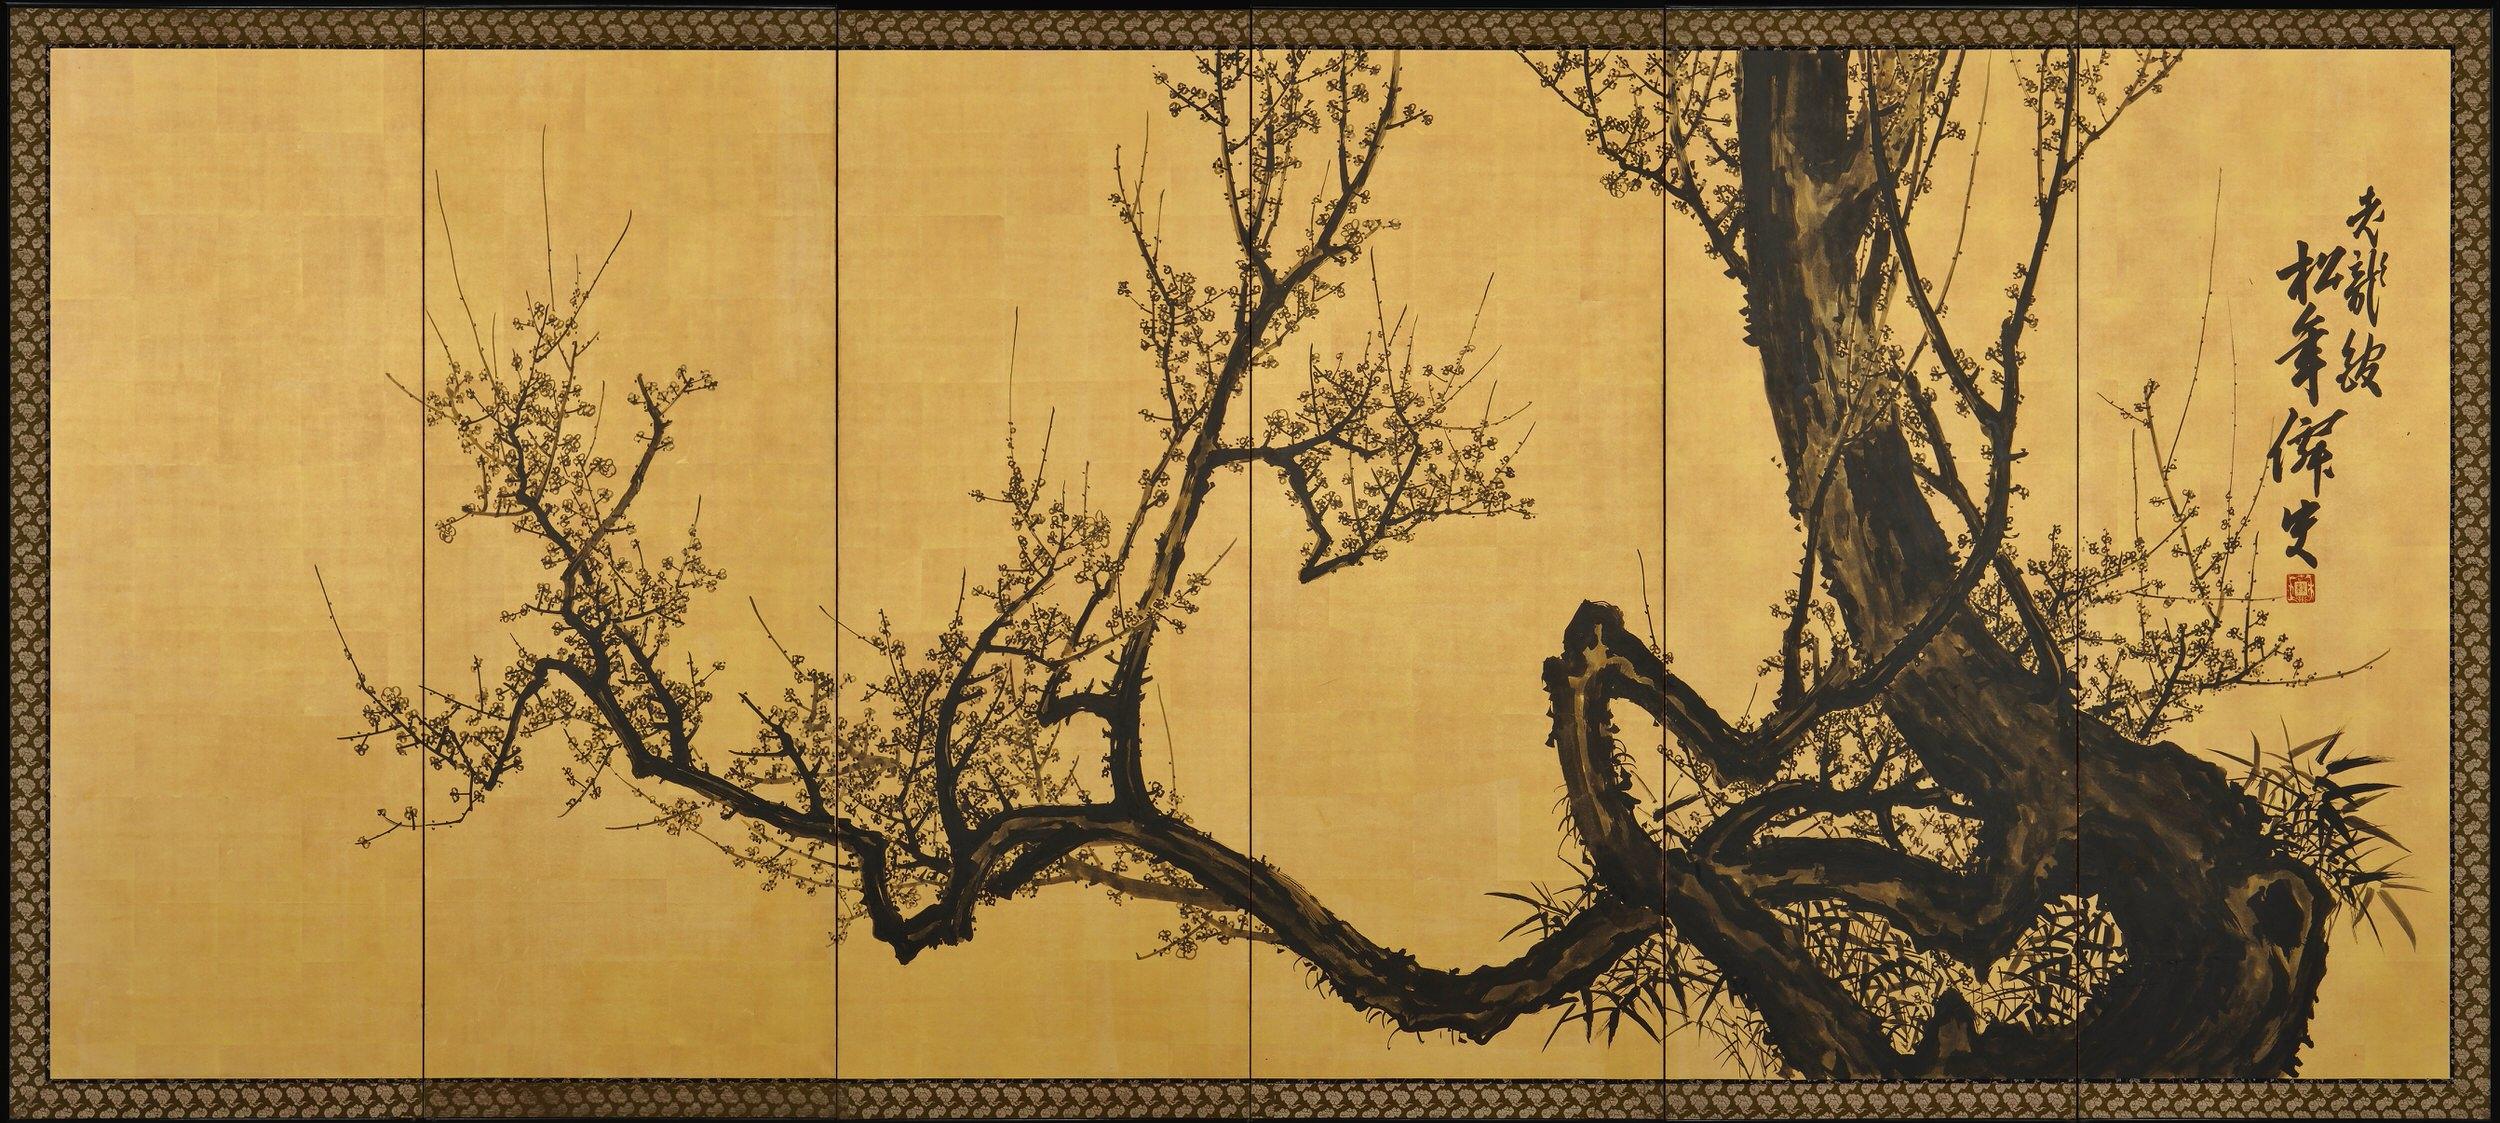 Suzuki Shonen (1848-1918)

Meiji period (1868-1912). Early 20th century.

Pair of six-fold screens. Ink and color on a gold leaf ground.

Signature: Shonen Senshi

Seal: Shonen

Dimensions:

Each: 372 cm x 171 cm  (146.5” x